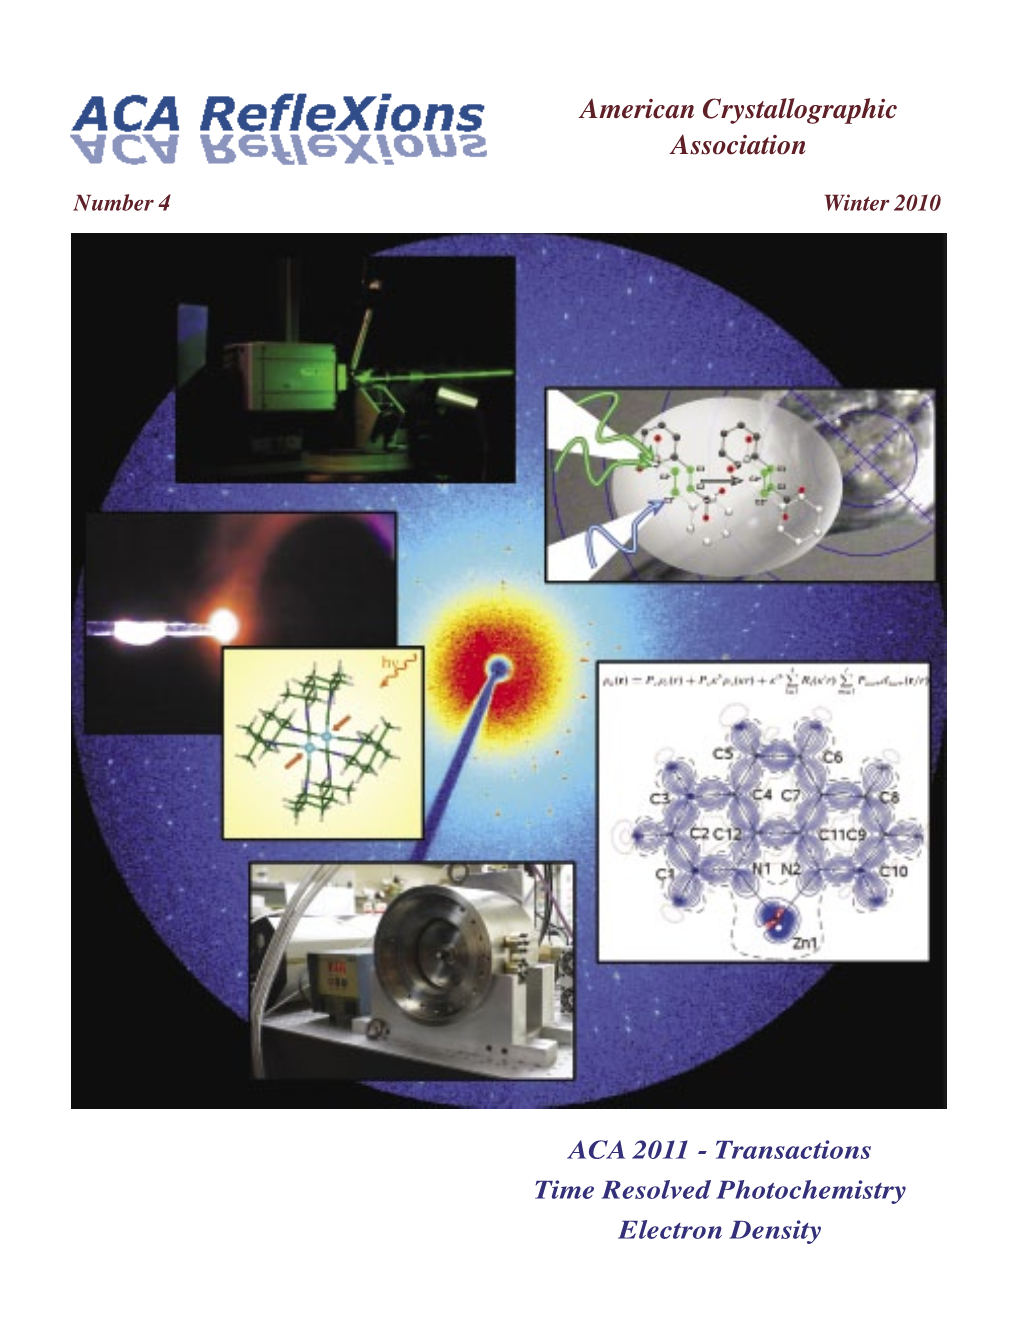 ACA 2011 - Transactions Time Resolved Photochemistry Electron Density Bruker AXS